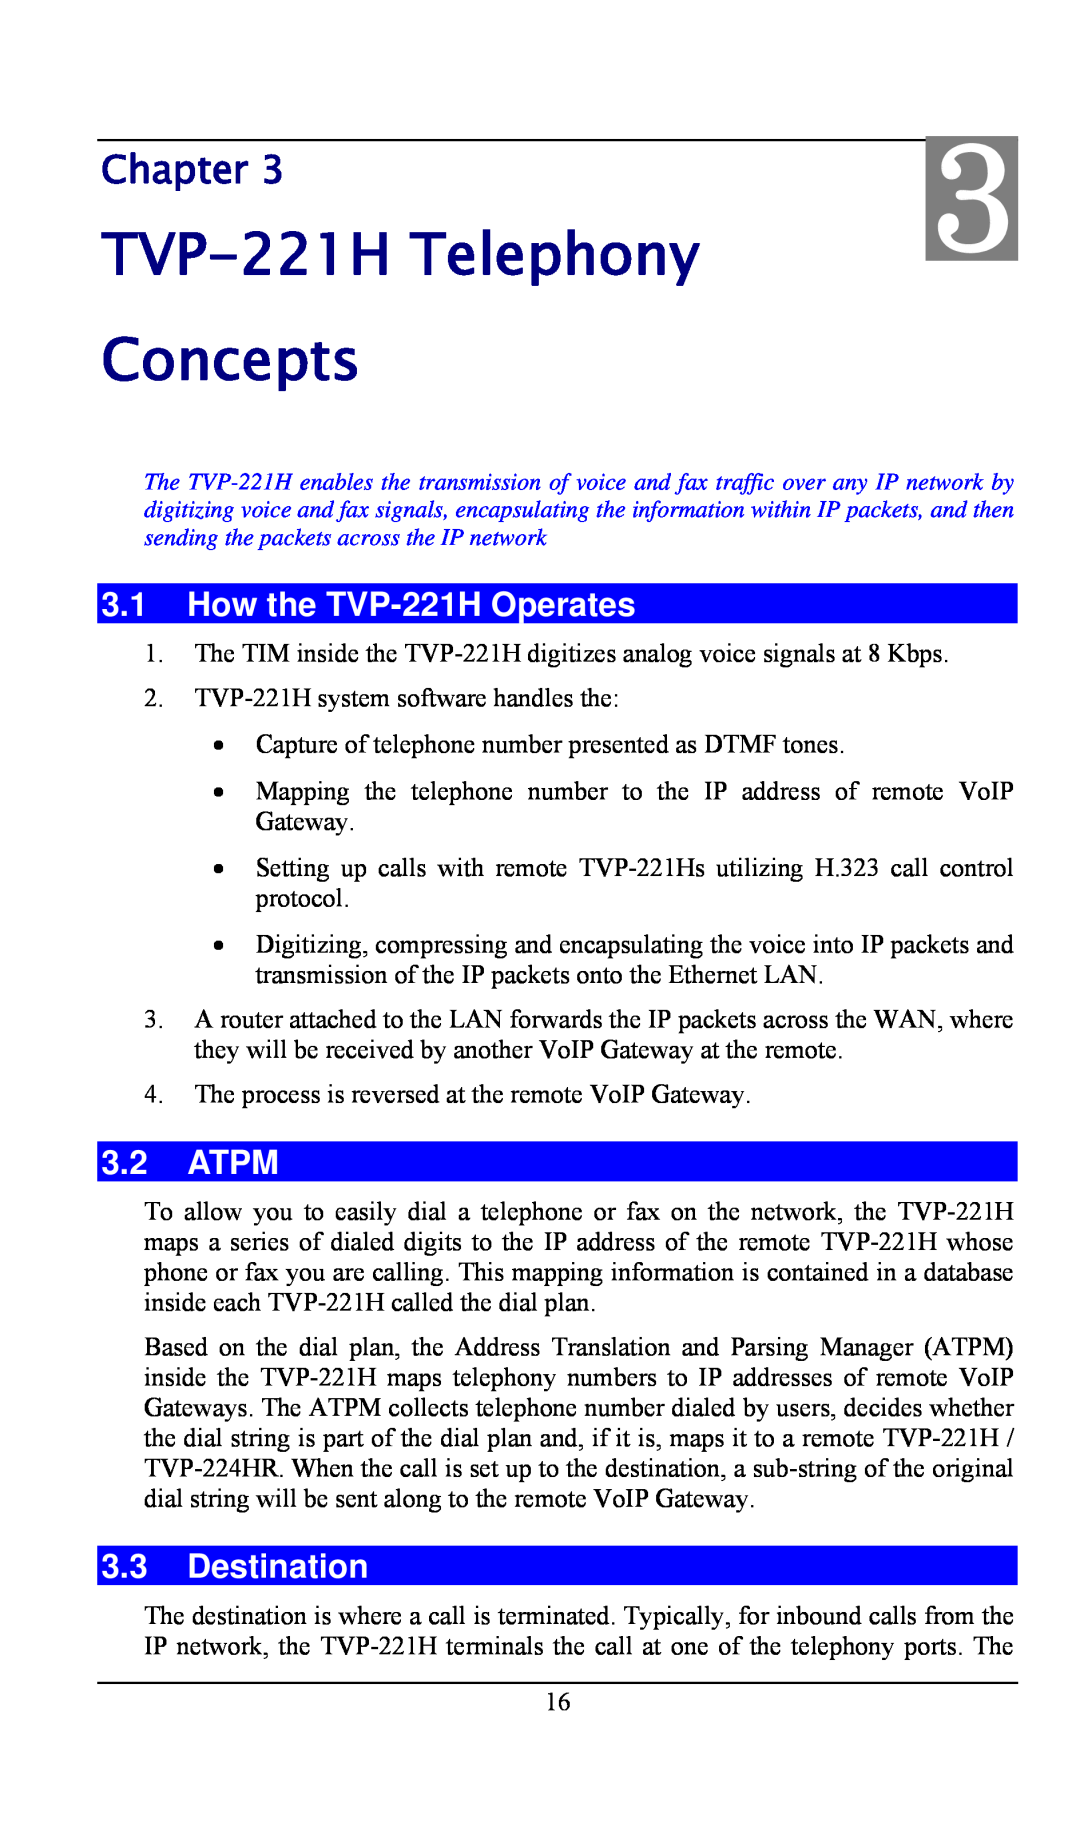 TRENDnet TVP- 221H, VoIP Gateway manual TVP-221H Telephony, Concepts, How the TVP-221H Operates, Atpm, Destination, Chapter 